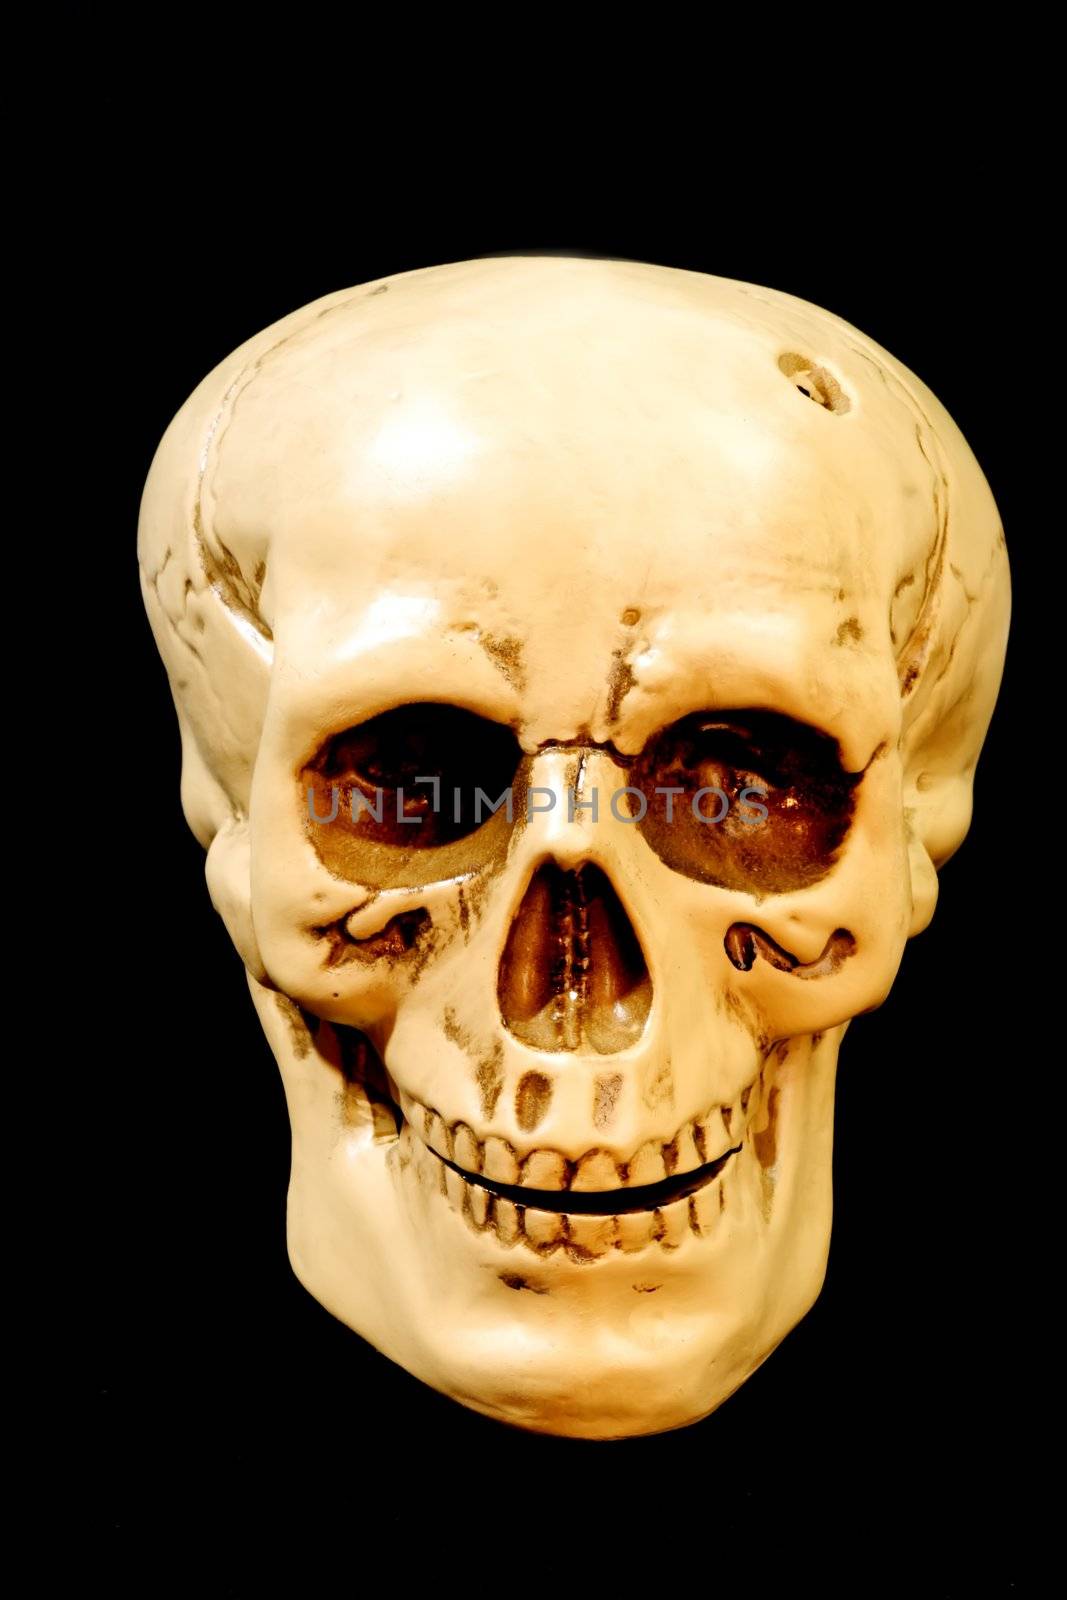 Imitation of a human skull - isolated on black background